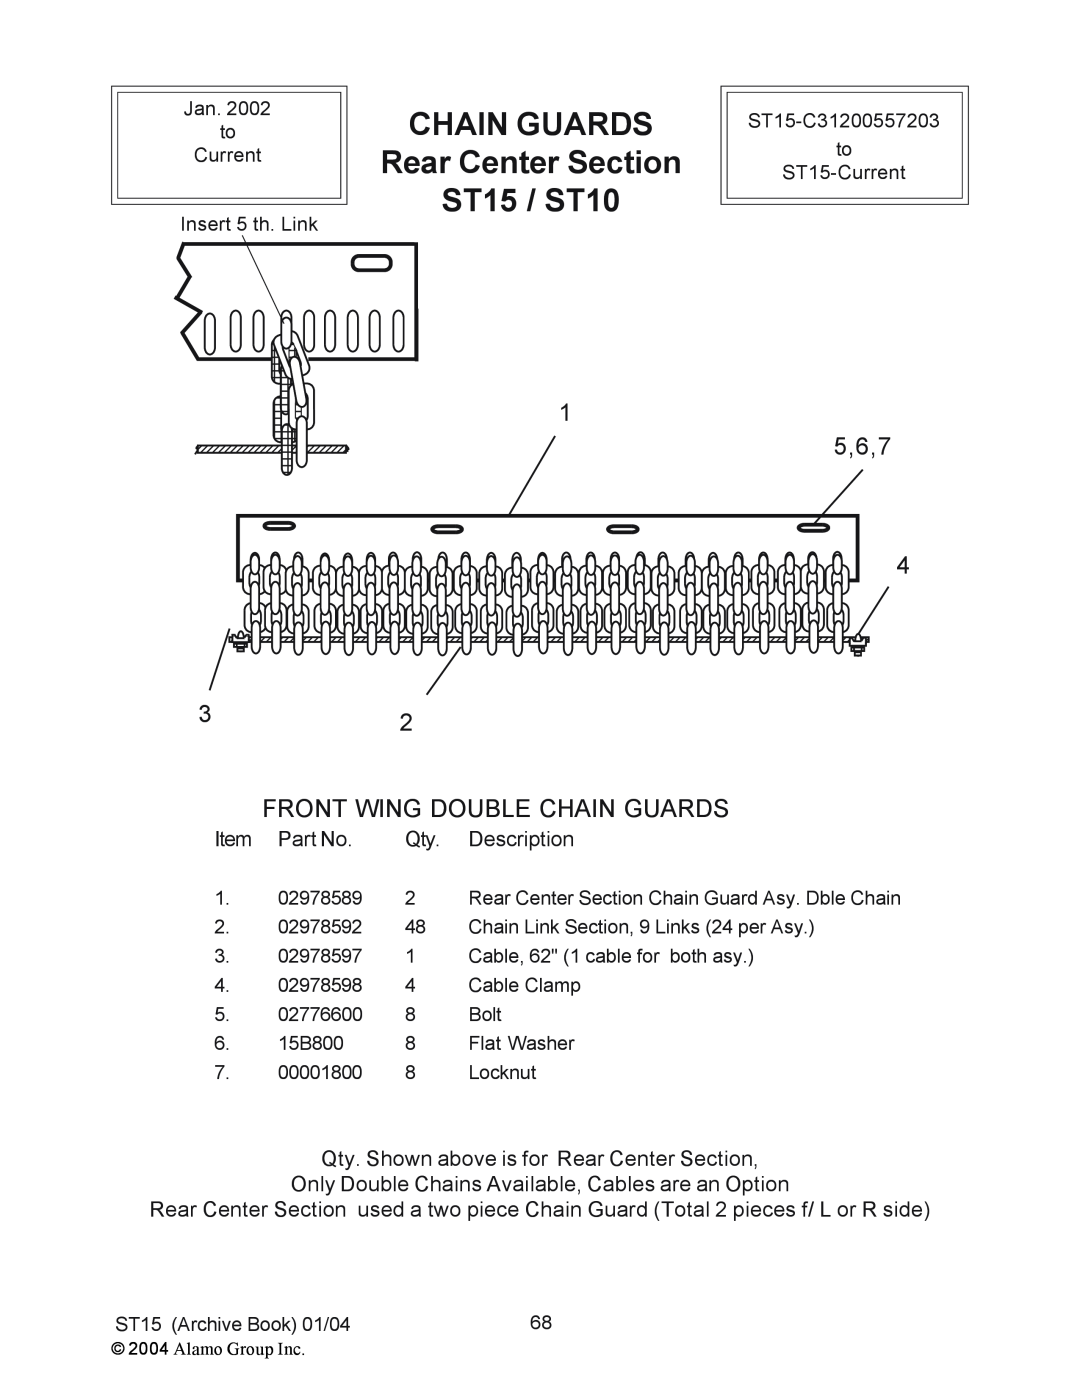 Alamo manual CHAIN GUARDS Rear Center Section ST15 / ST10, 5,6,7, Front Wing Double Chain Guards, Description 